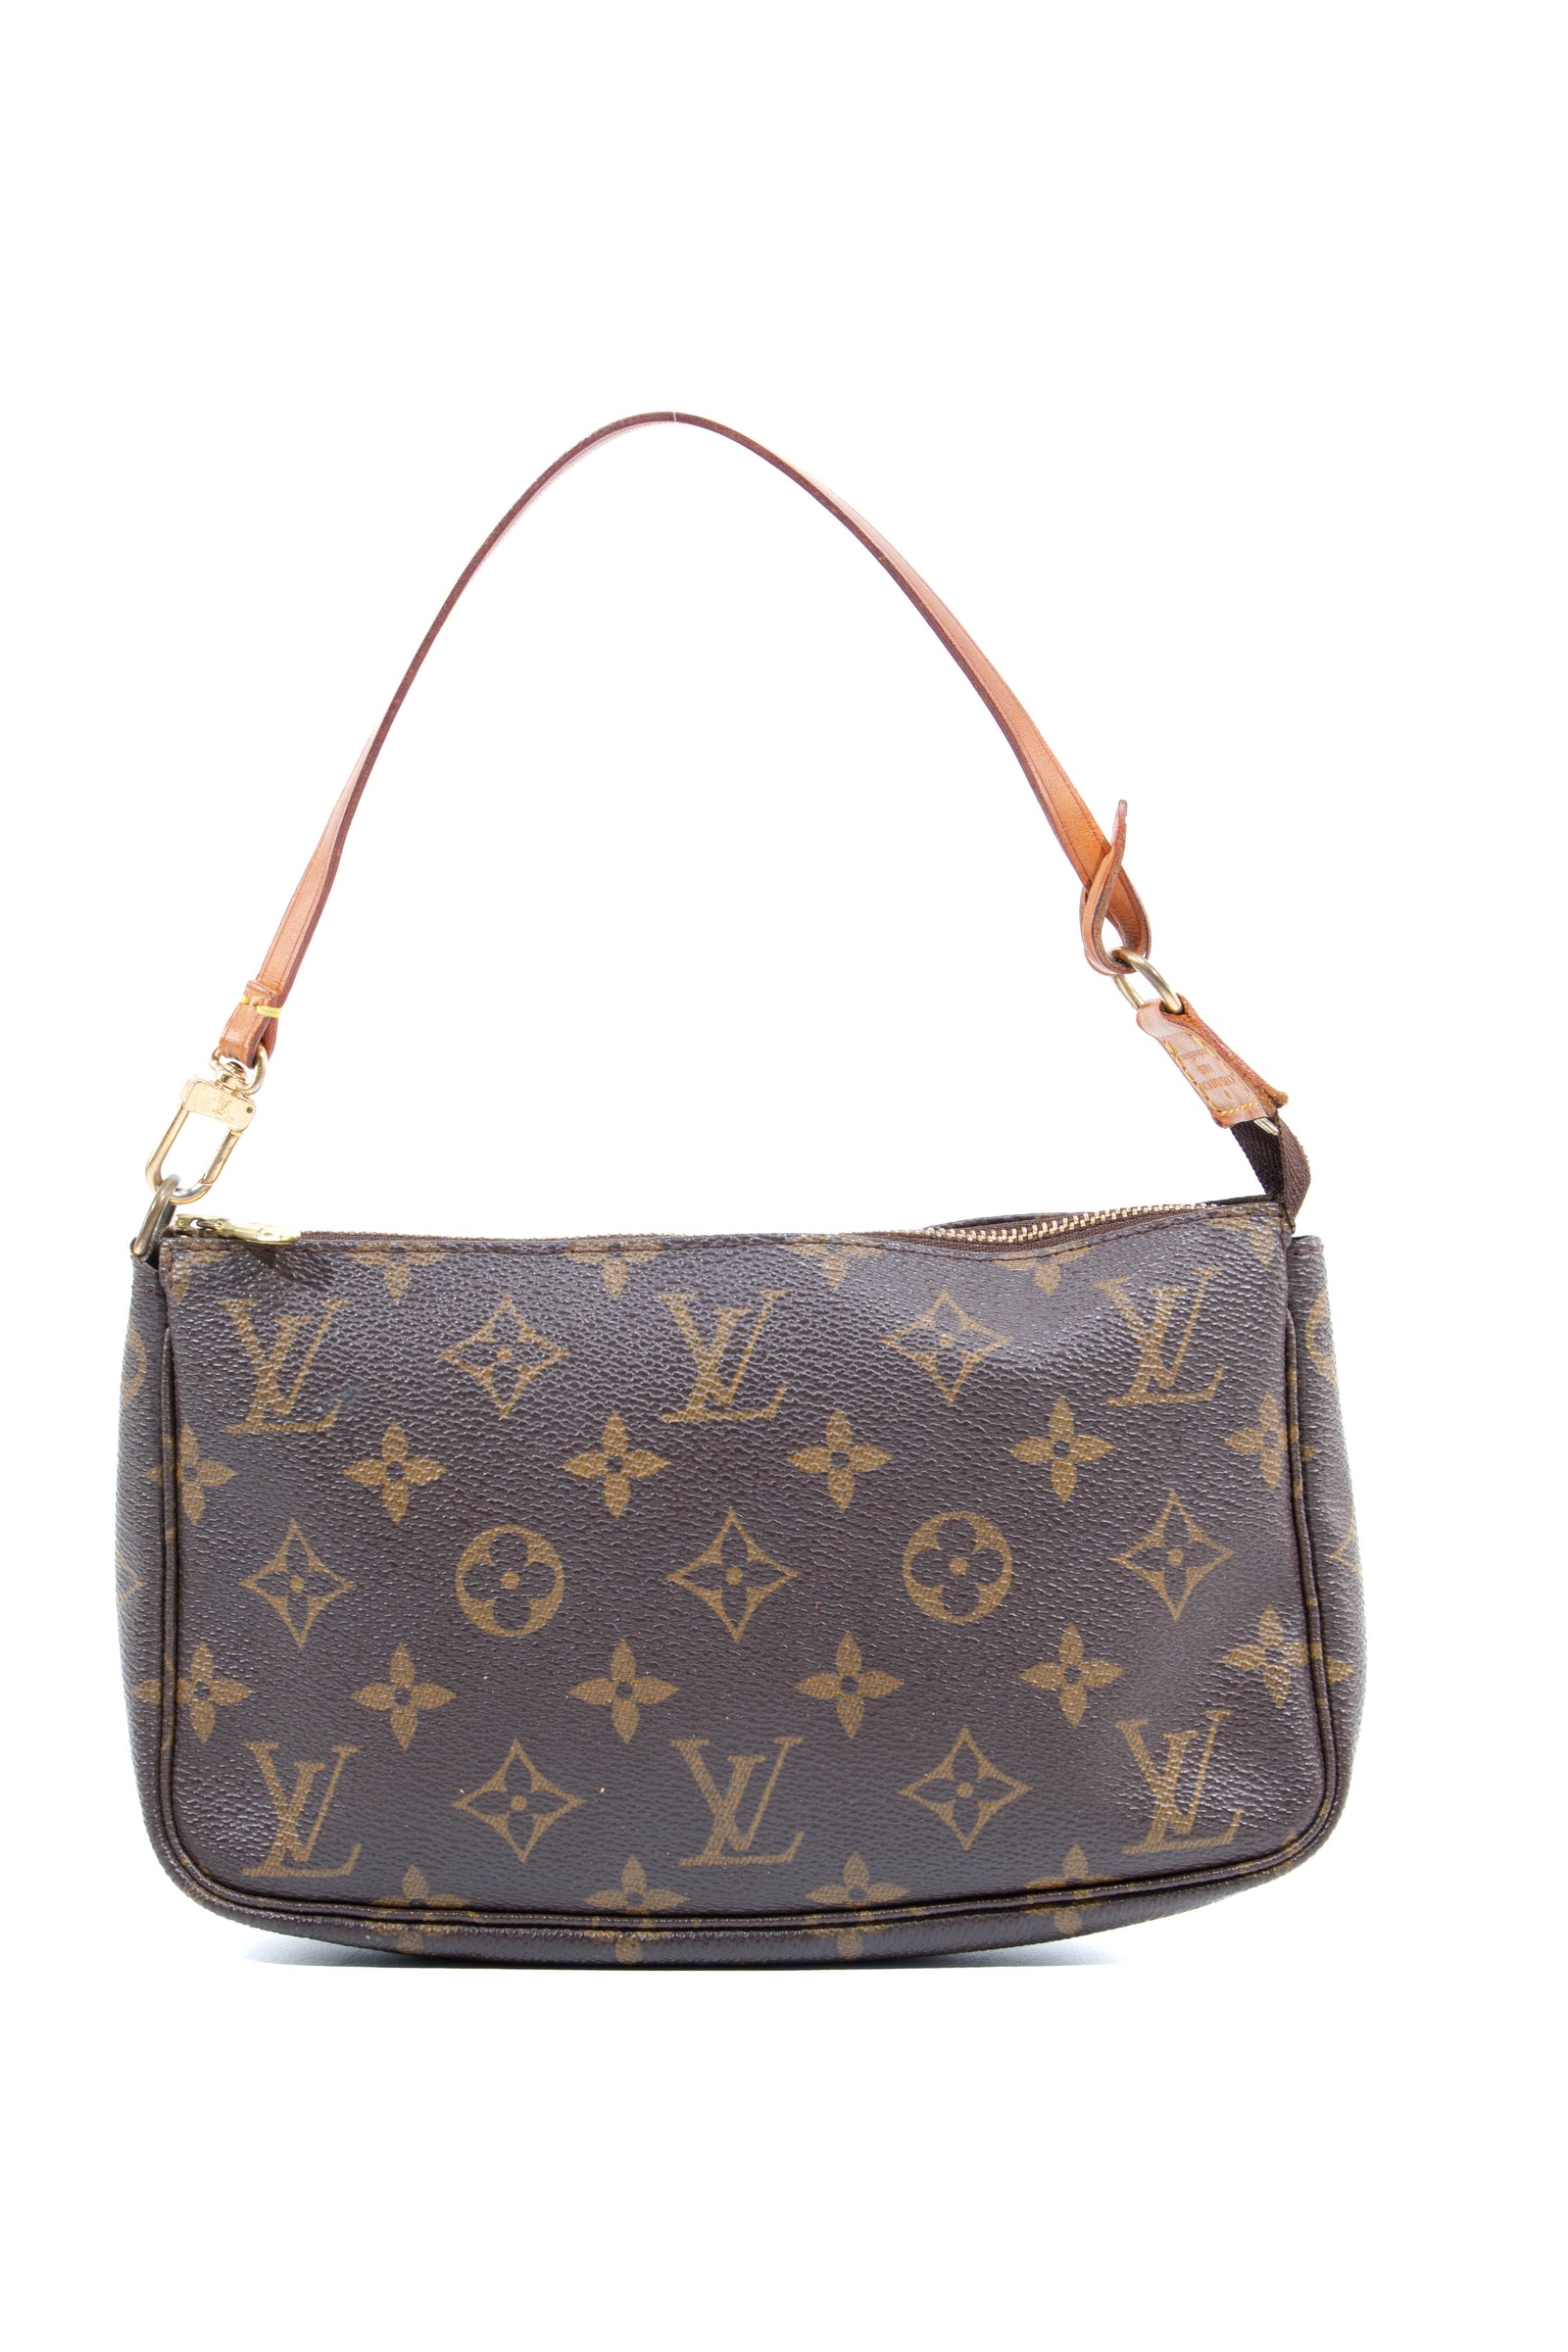 Louis Vuitton Bags - Buy your next Louis Vuitton Bag at